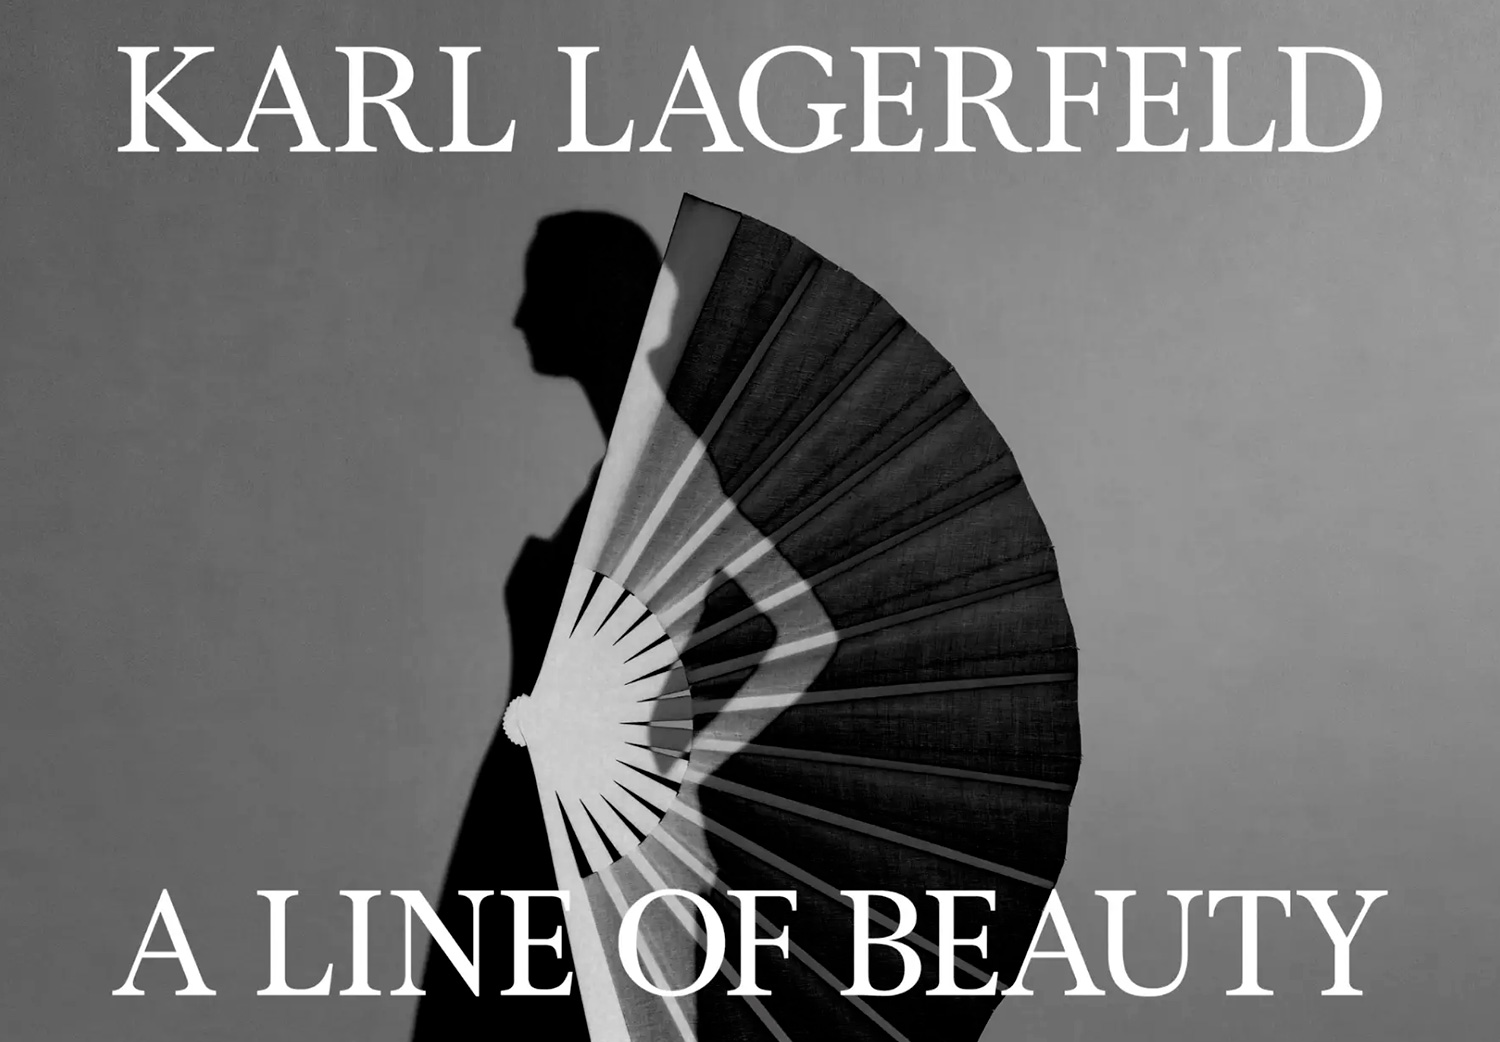 karl-lagerfeld-a-line-of-beauty-met-museum